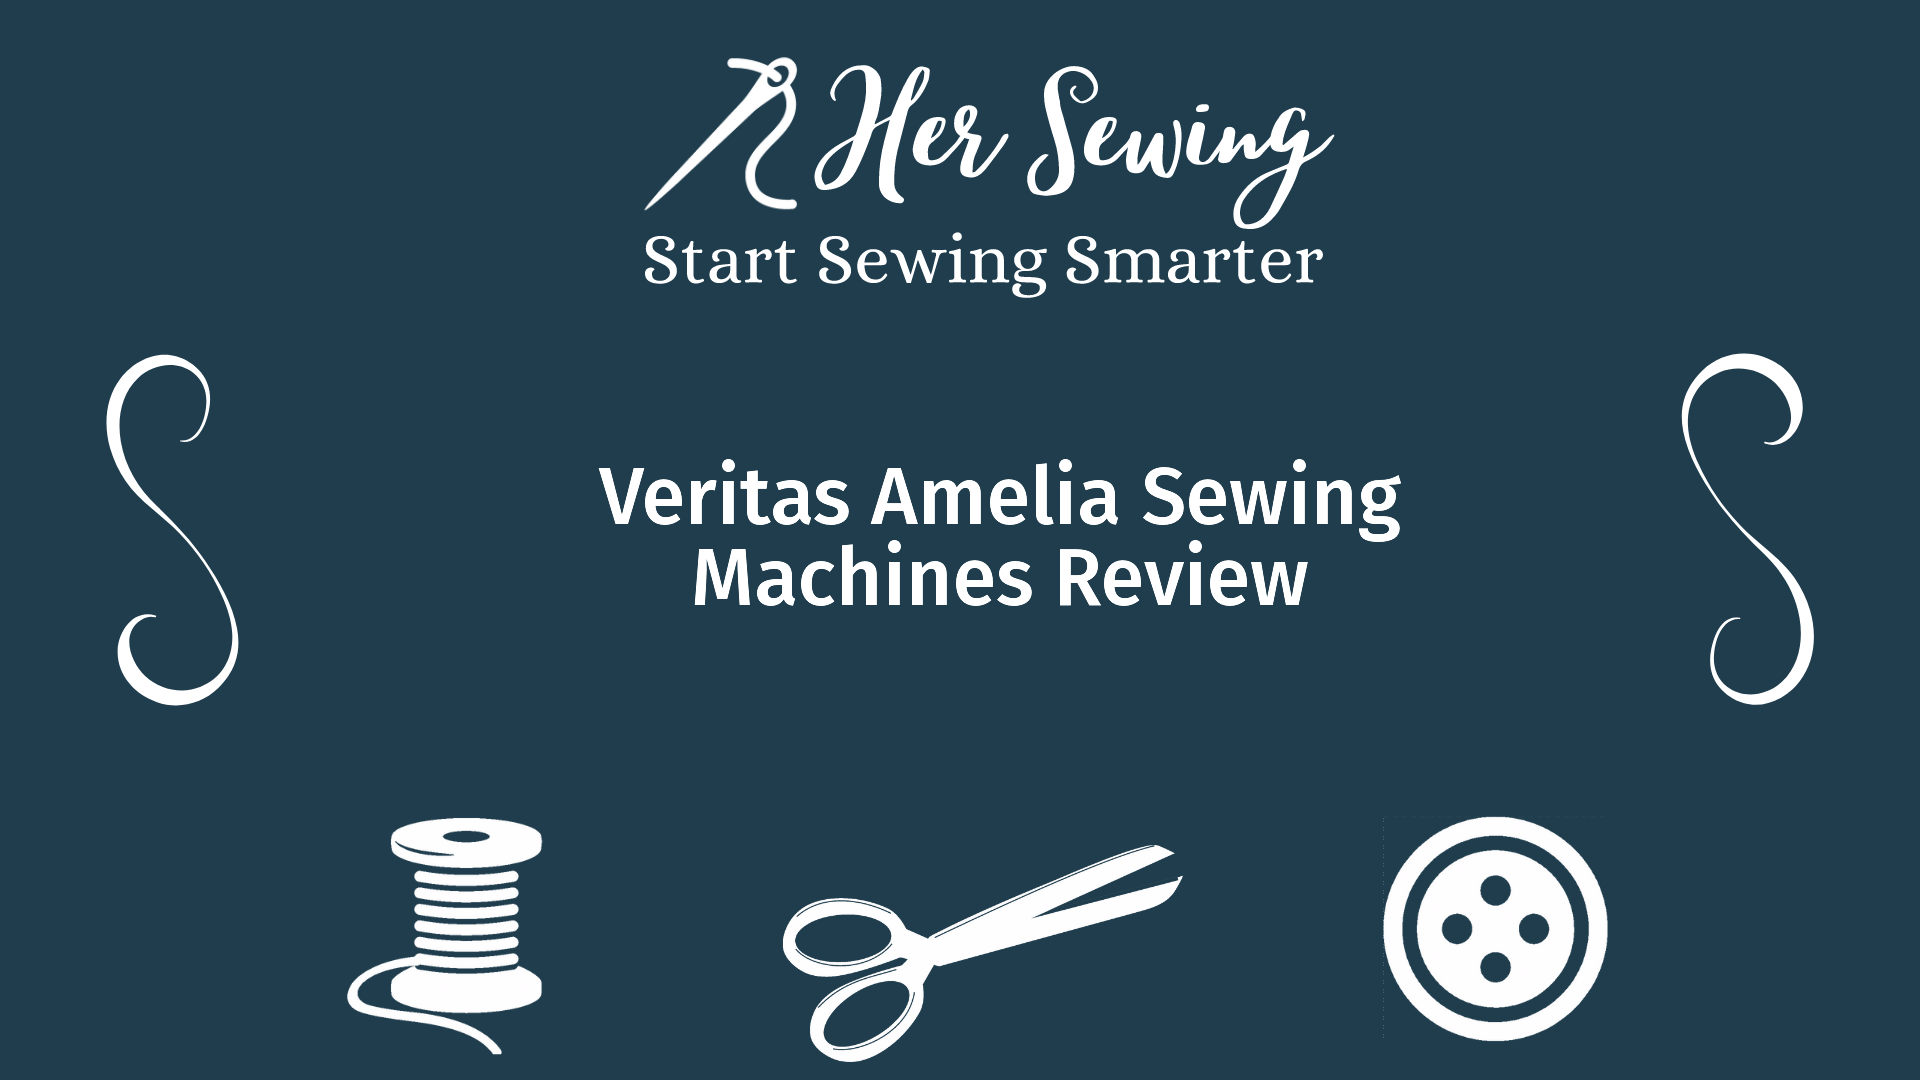 Veritas Amelia Sewing Machines Review